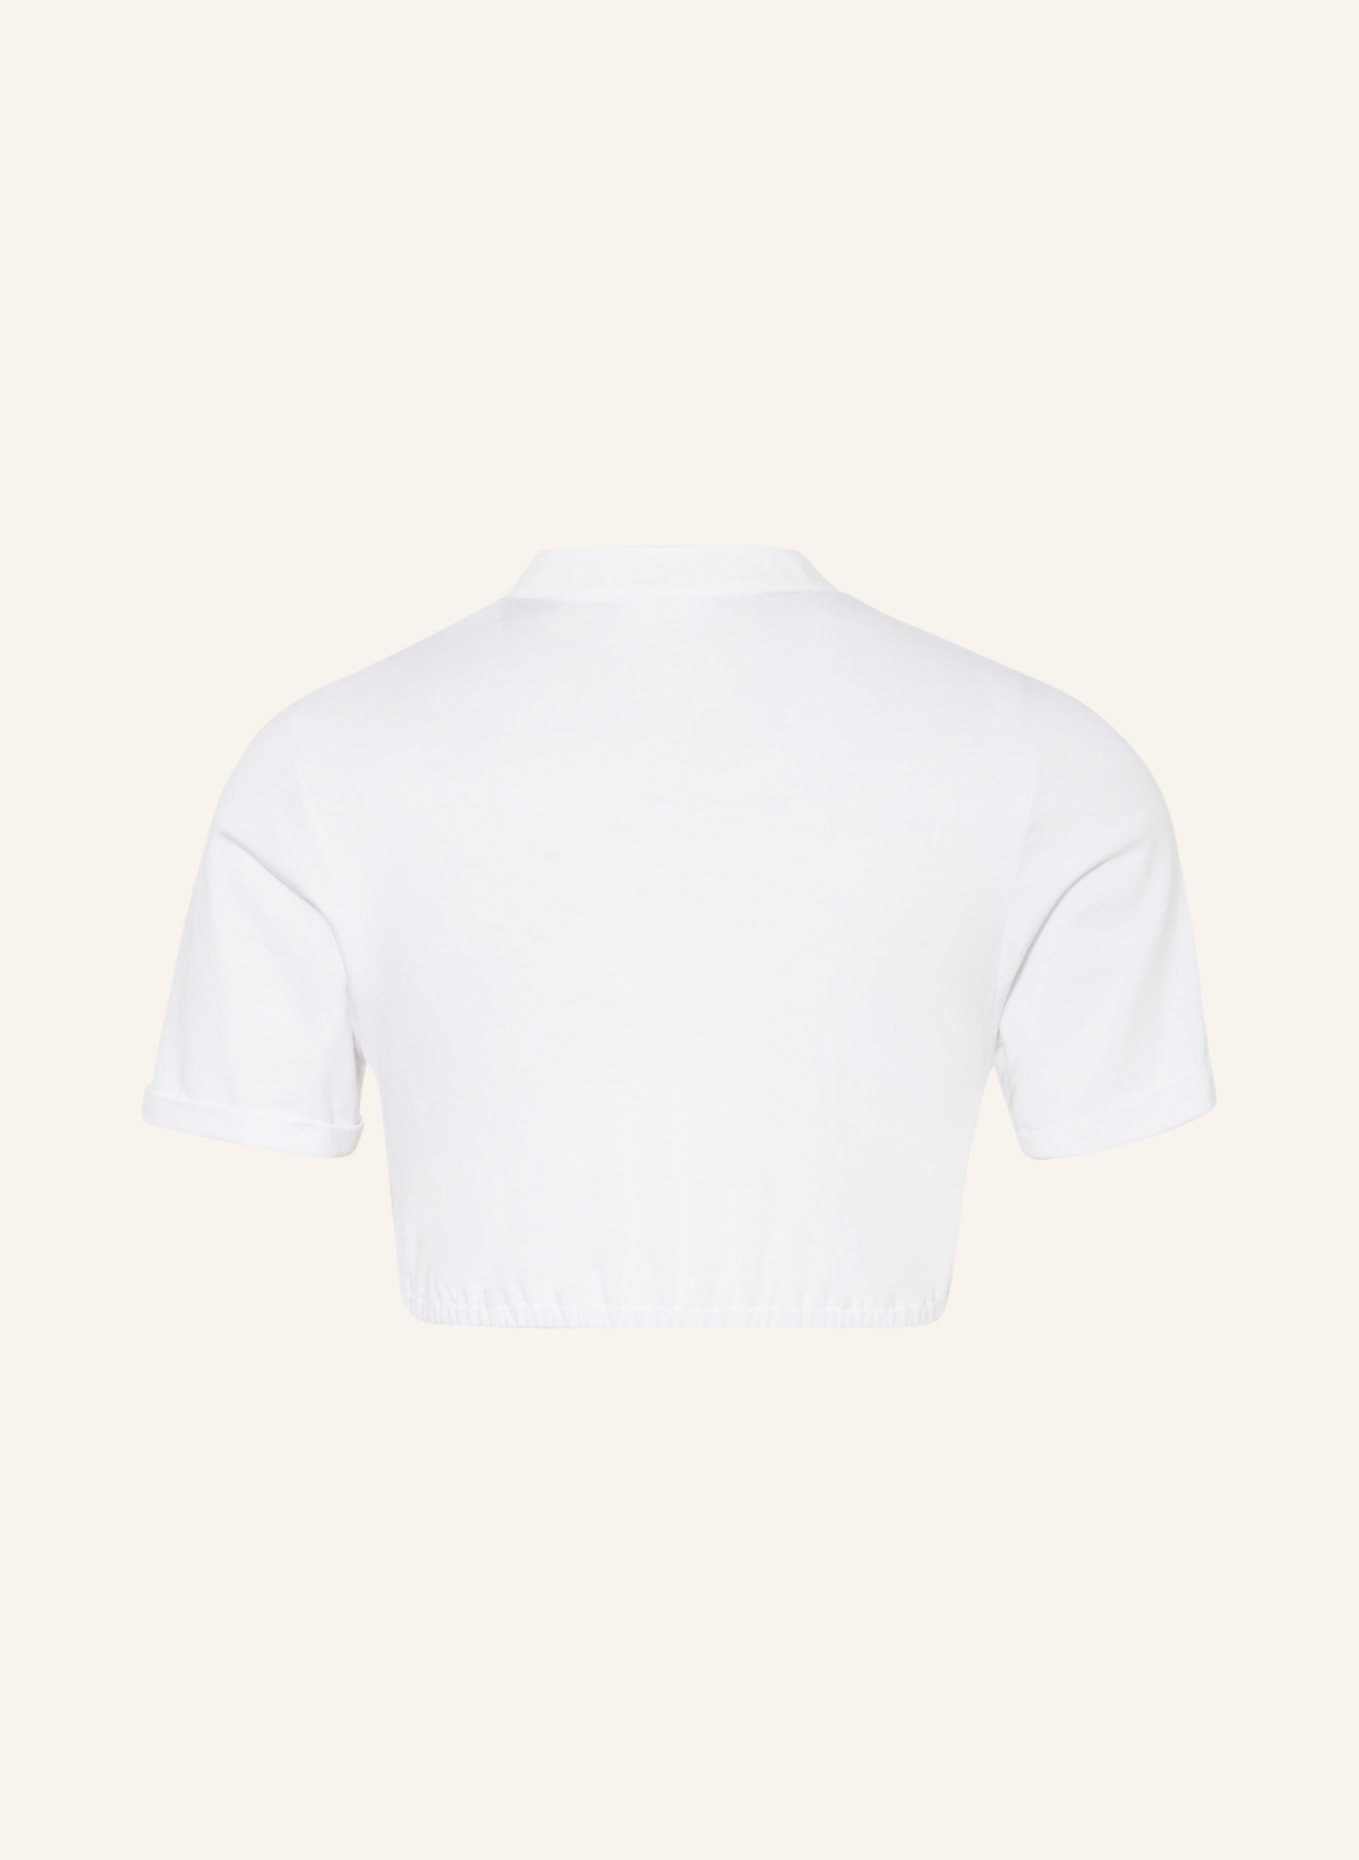 WALDORFF Dirndl blouse, Color: WHITE (Image 2)